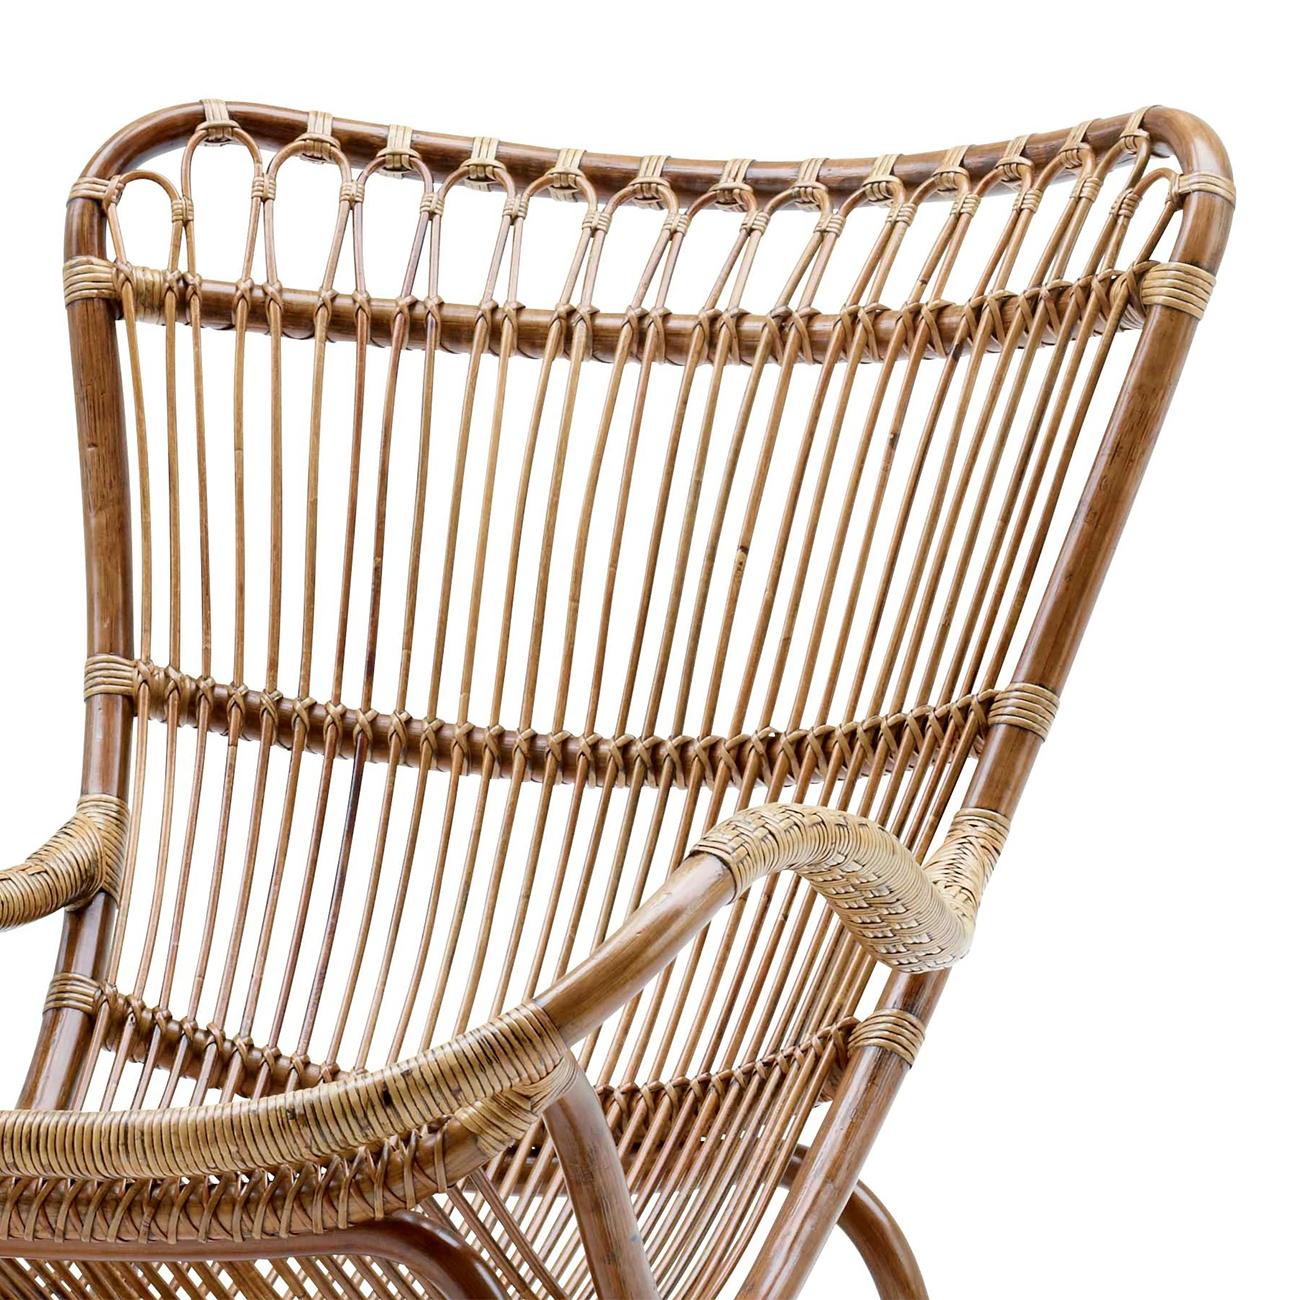 Rocking Chair Daddy Brown tout en 
rotin naturel brun avec pieds à bascule.